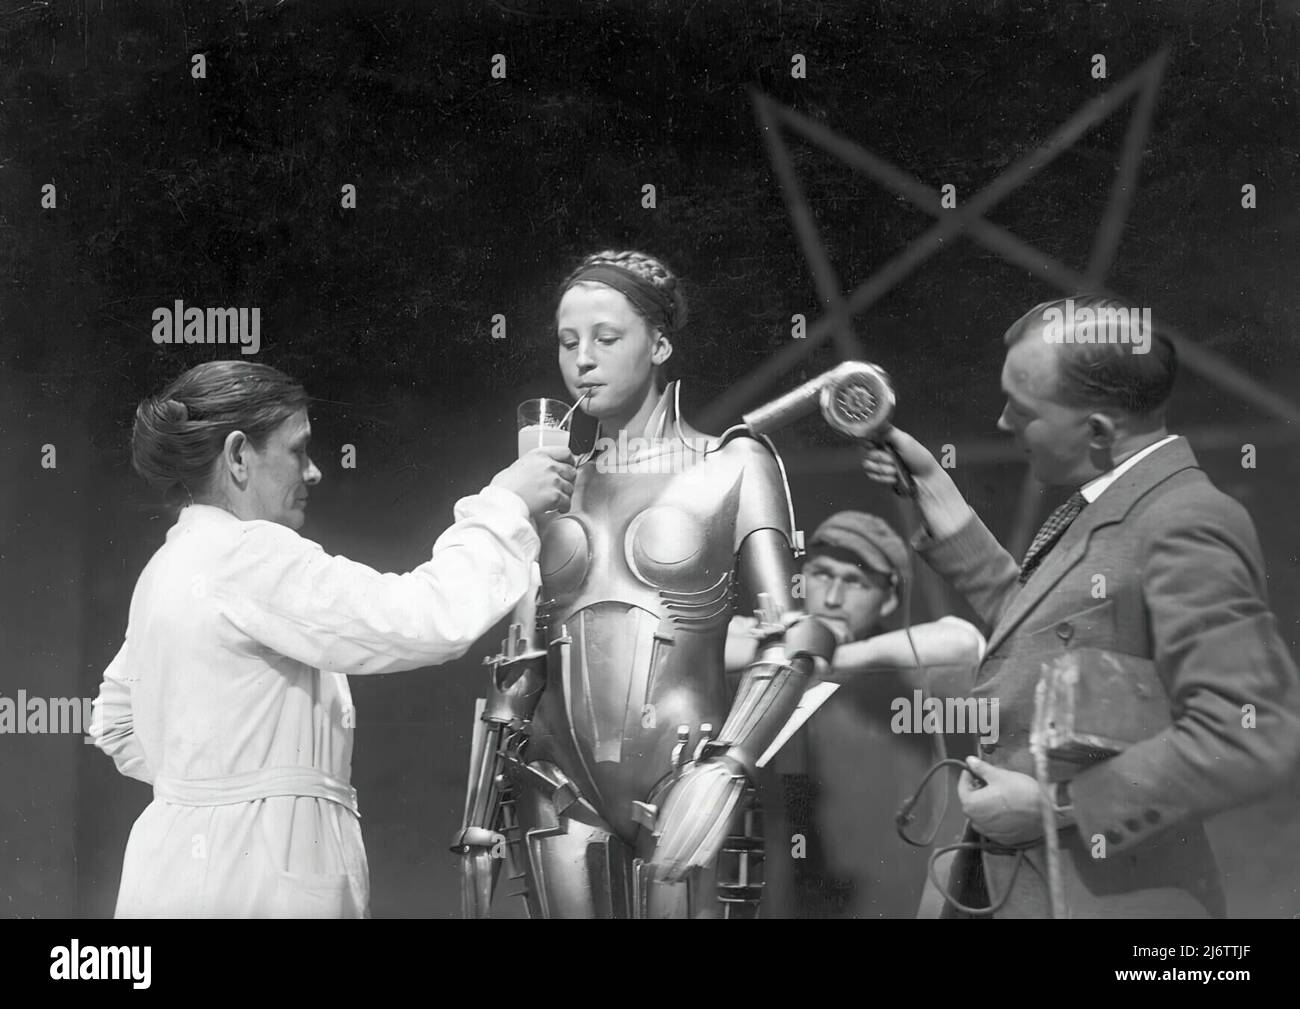 BRIGITTE HELM in METROPOLIS (1927), directed by FRITZ LANG. Credit: U.F.A / Album Stock Photo